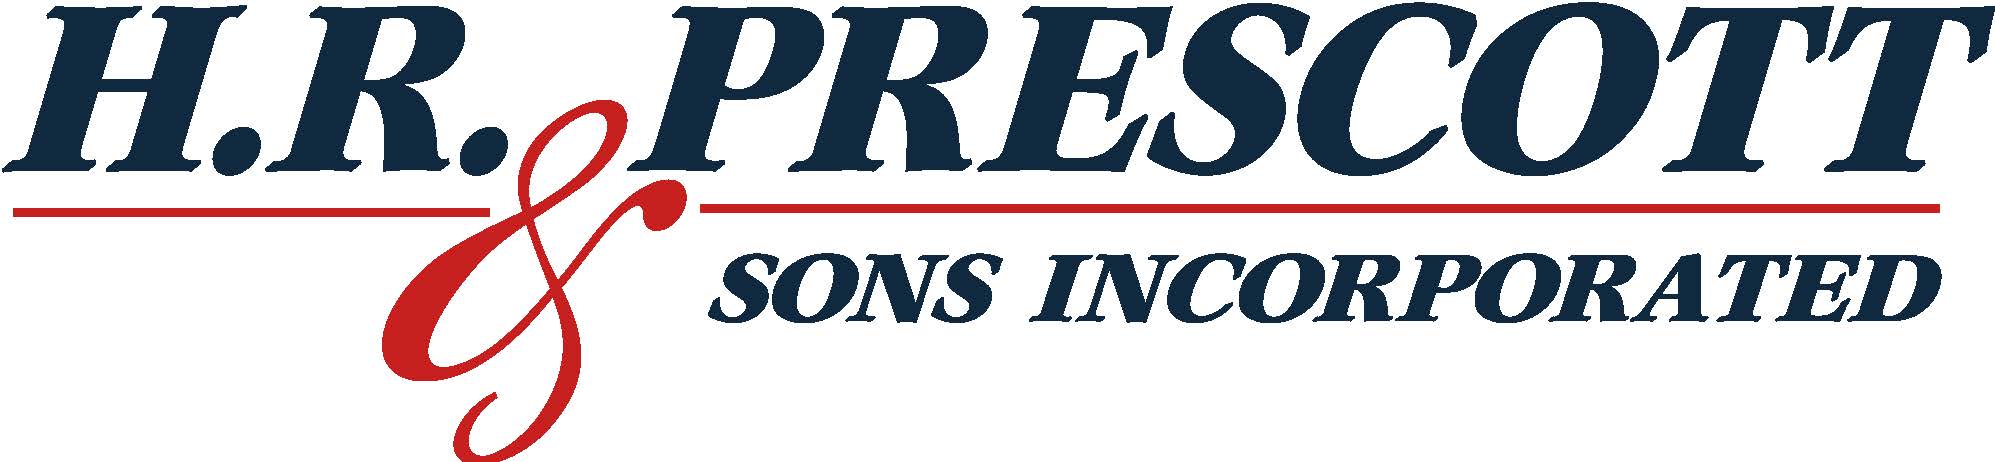 HR Prescott & Sons